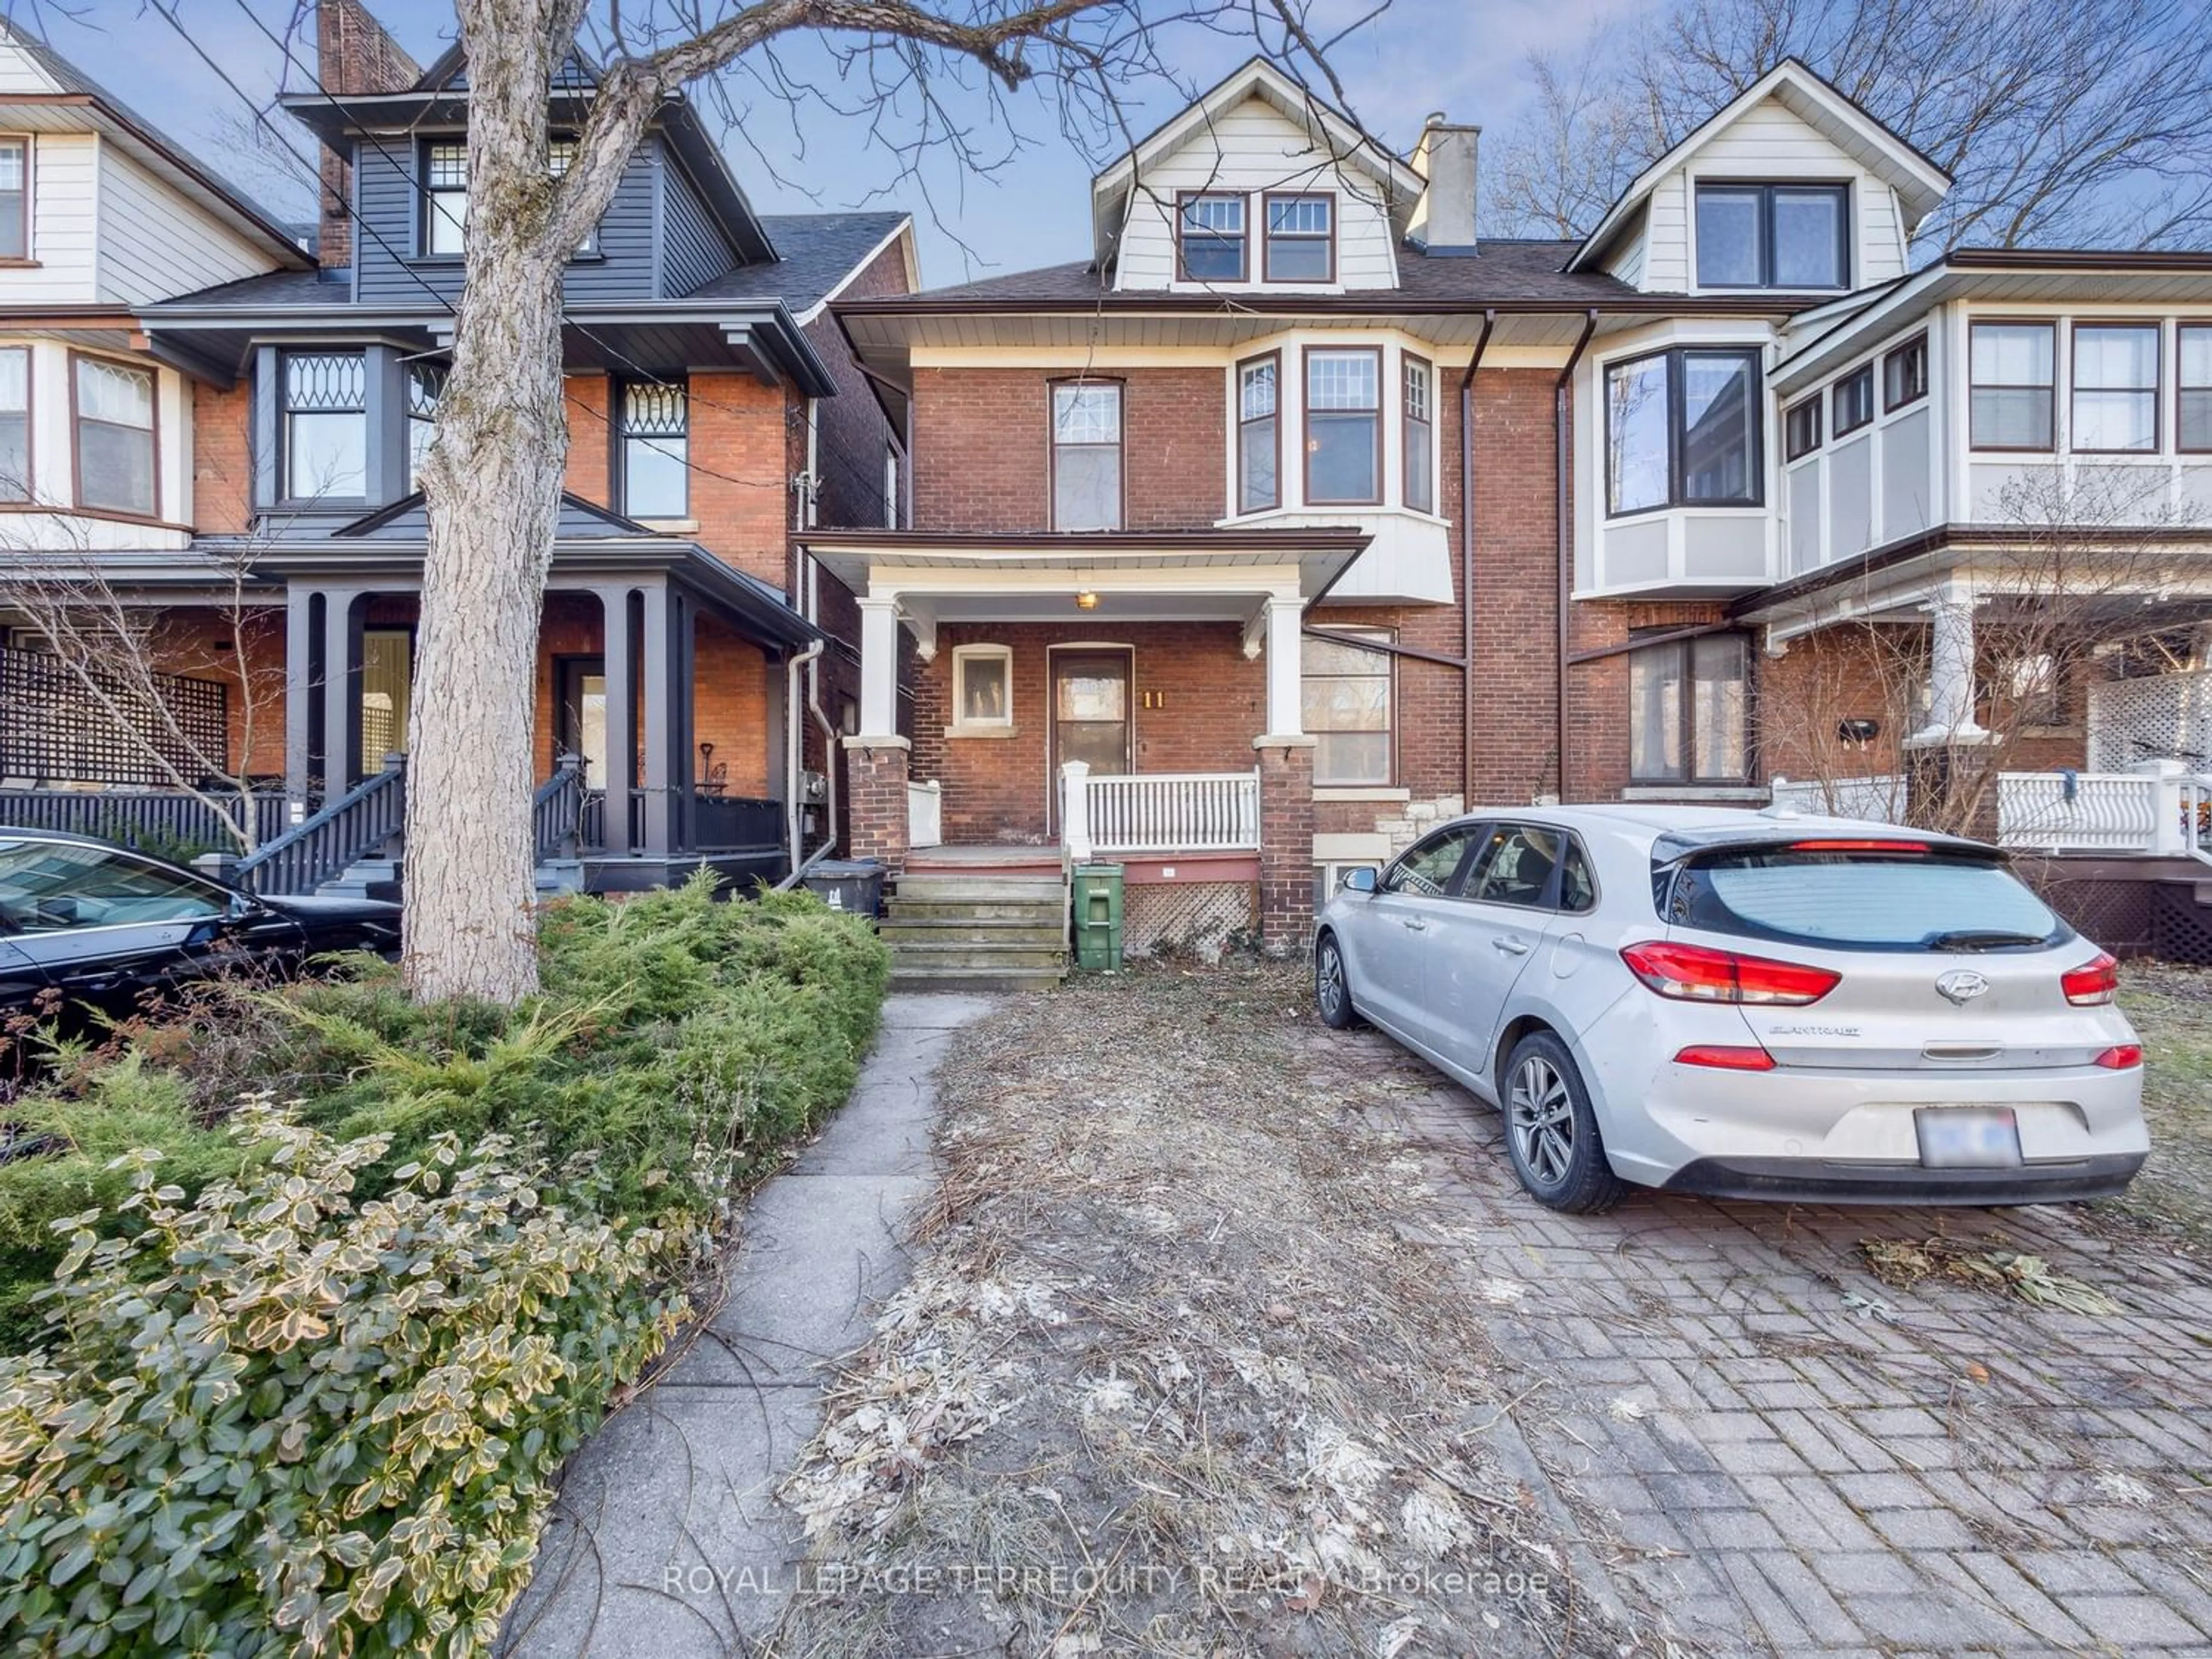 Home with brick exterior material for 11 Barton Ave, Toronto Ontario M5R 1G7